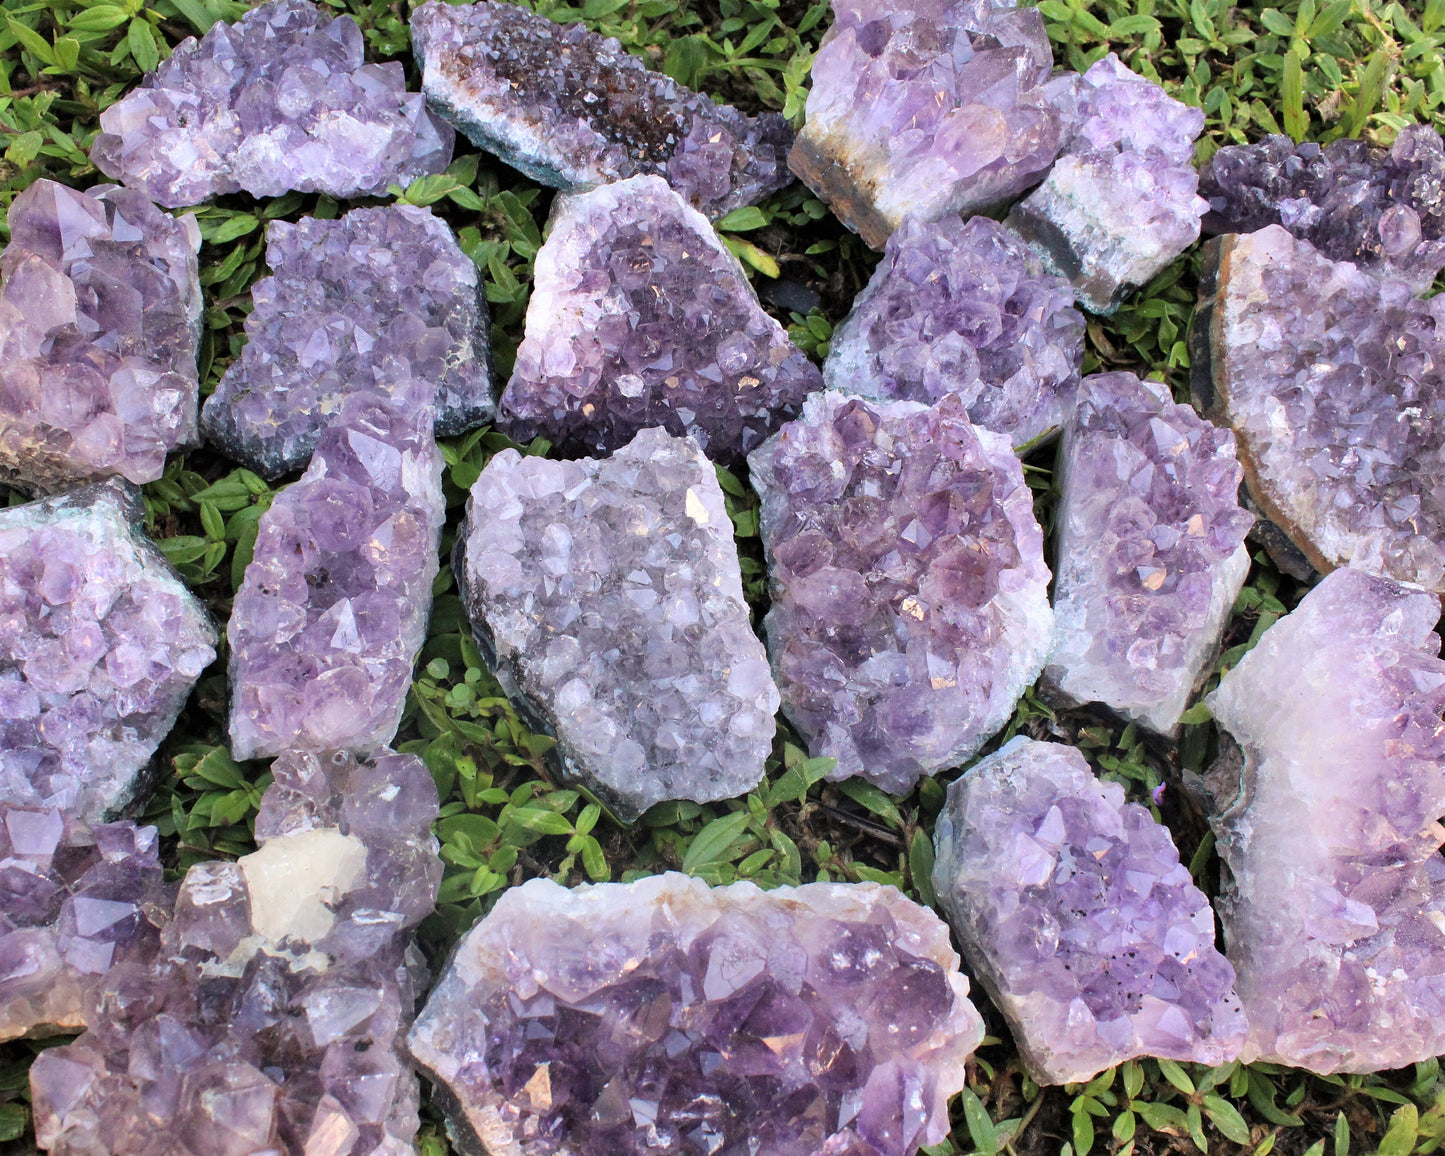 Large Amethyst Crystal Clusters